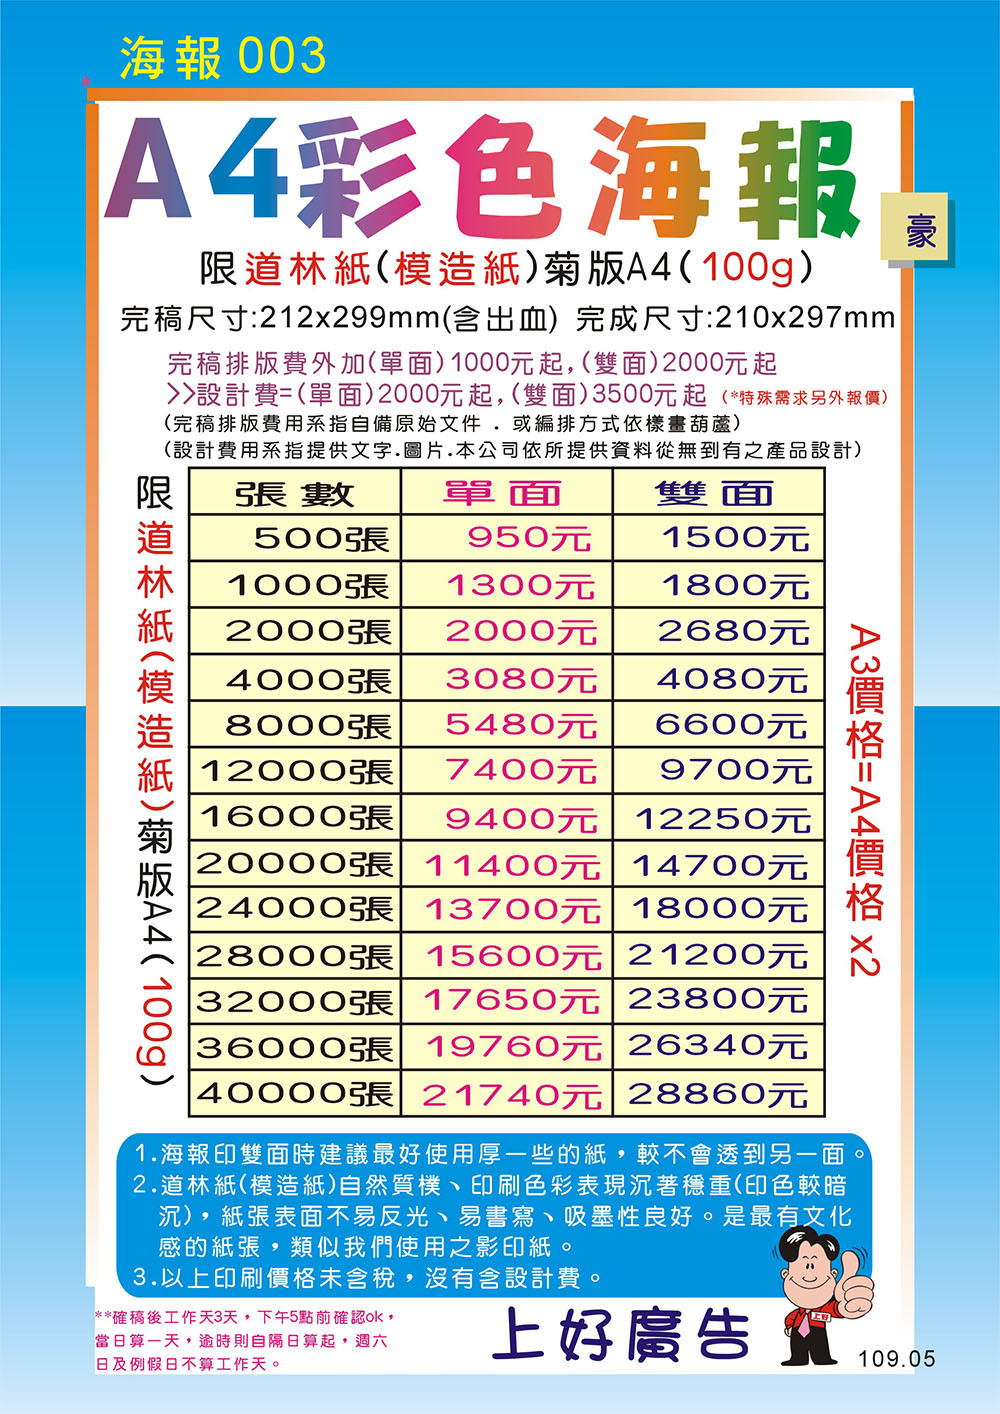 003-A4彩色海報-道林紙(模造紙)-100g-價格表